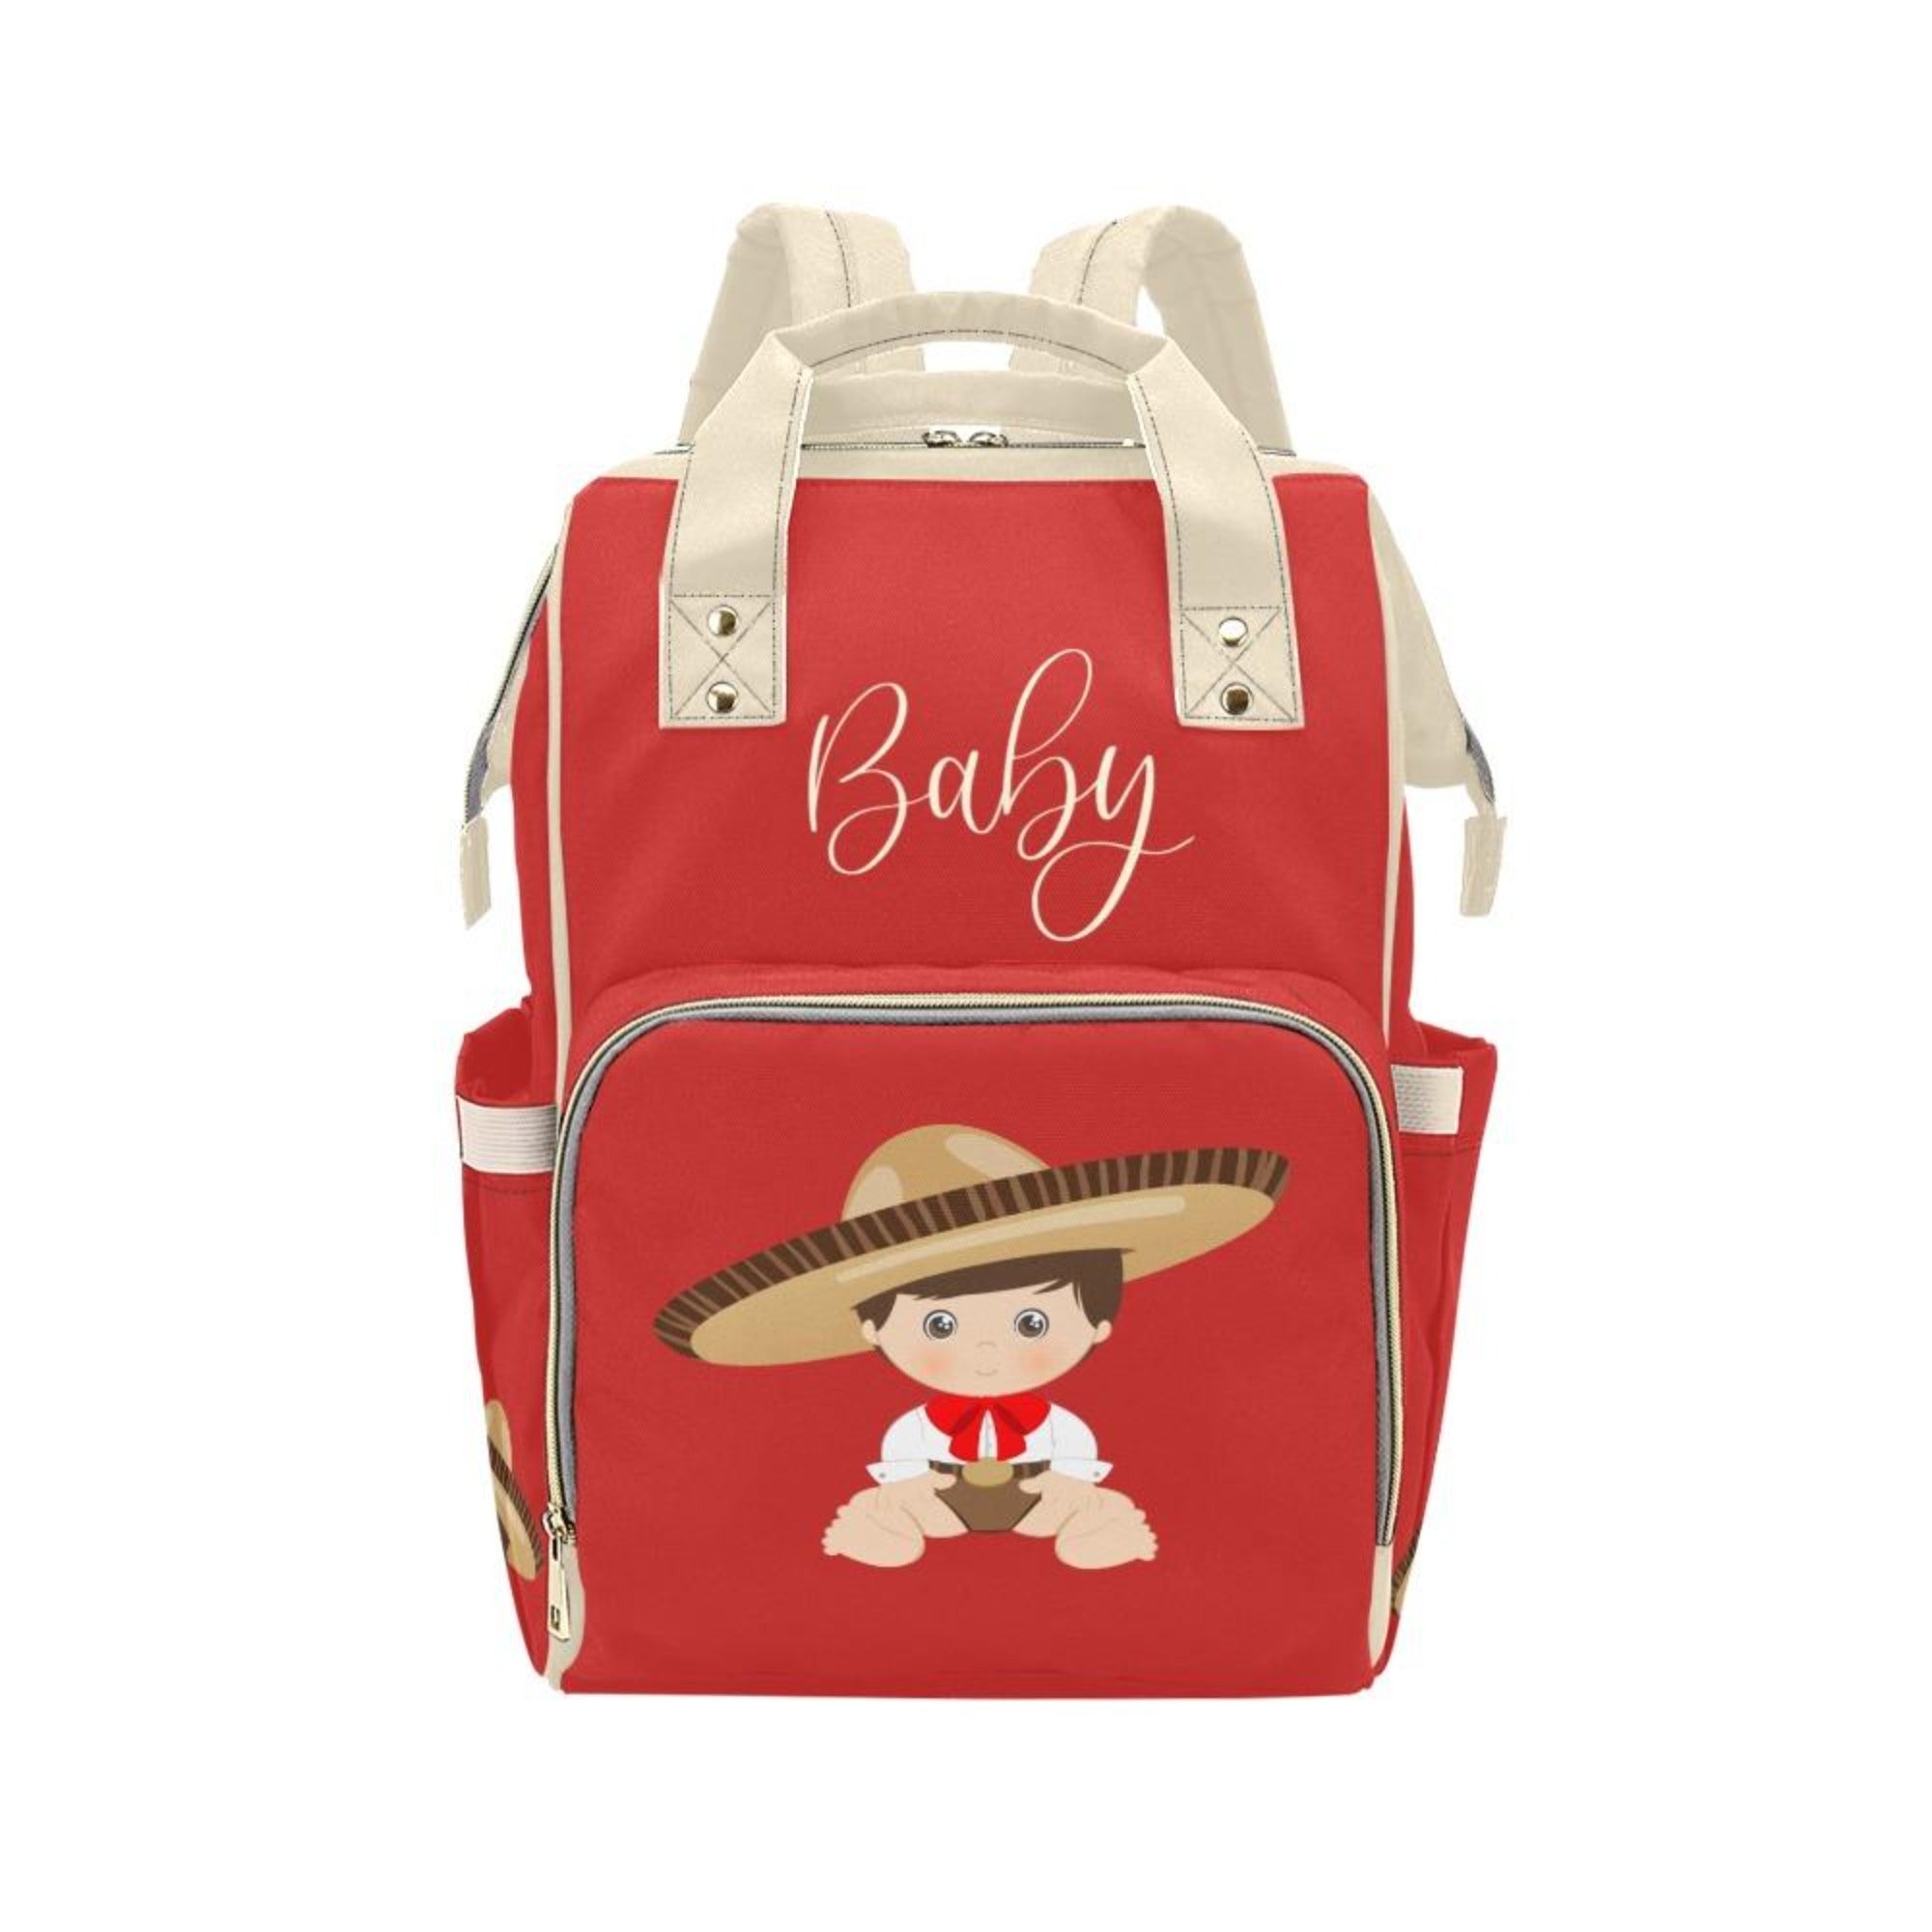 Designer Diaper Bags - Backpack Baby Bag Precious Latino Baby Boy Multi-Function Backpack